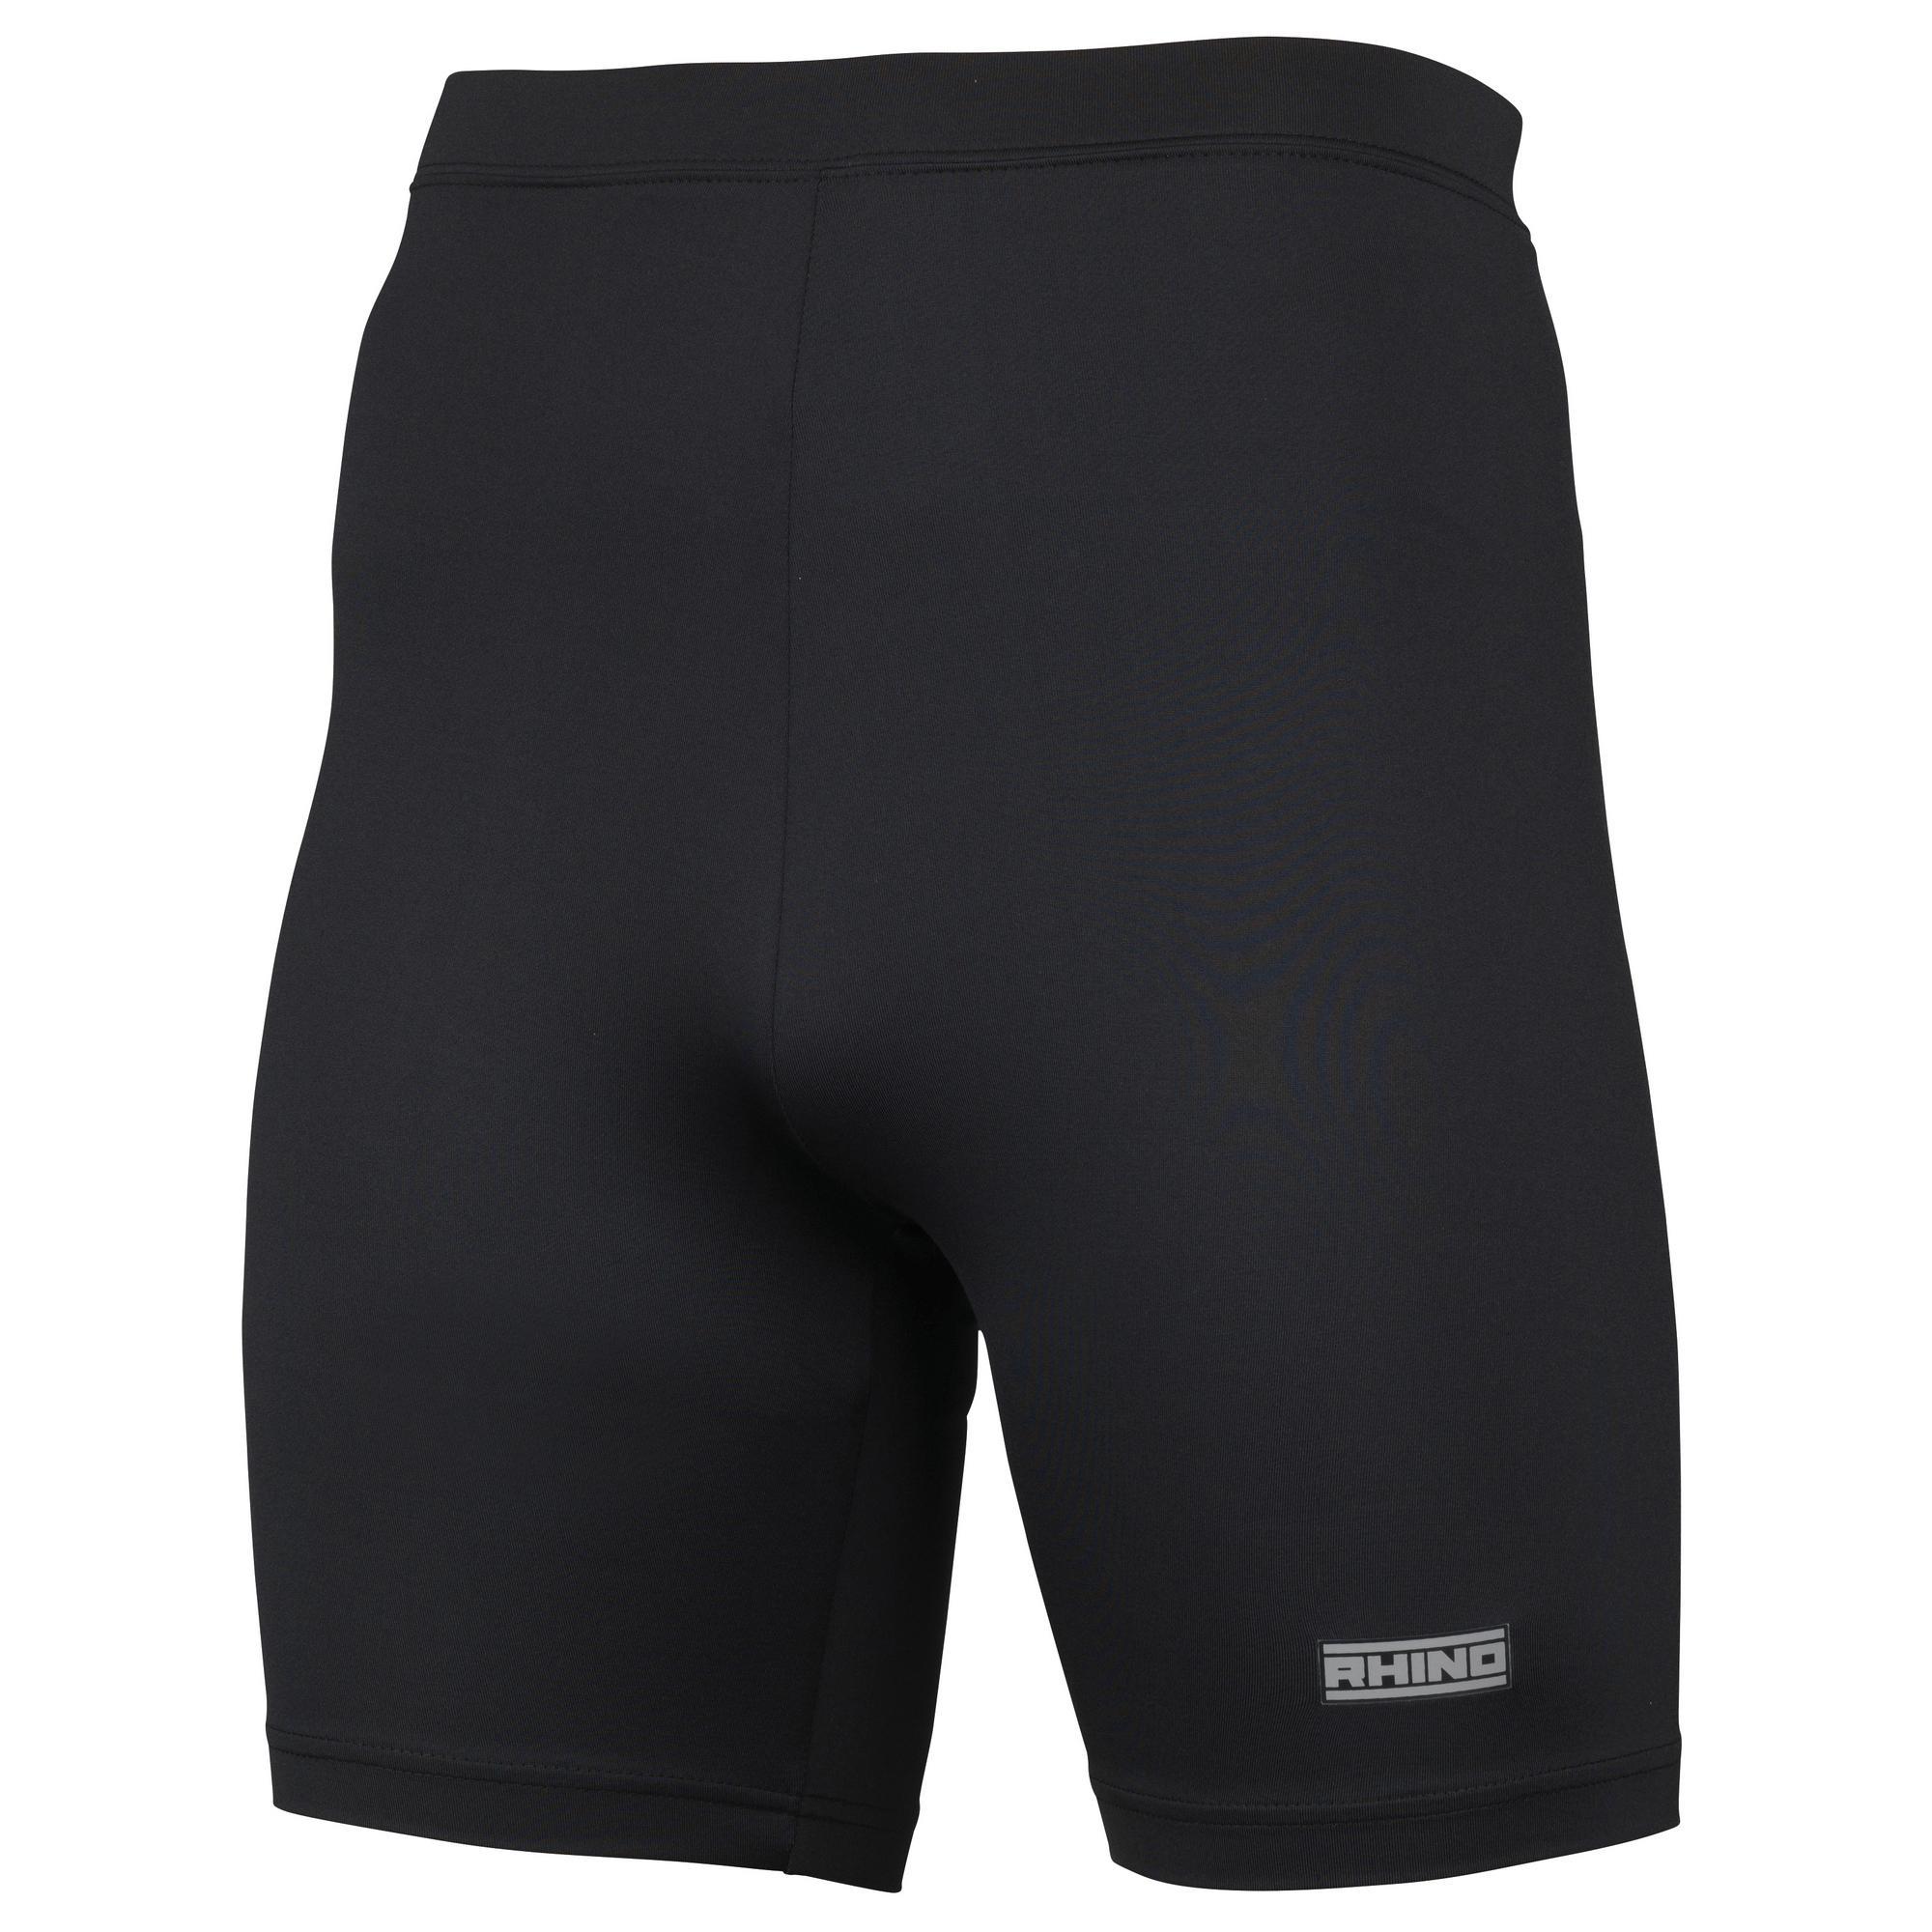 Rhino Mens Sports Base Layer Shorts (Black) (S/M)